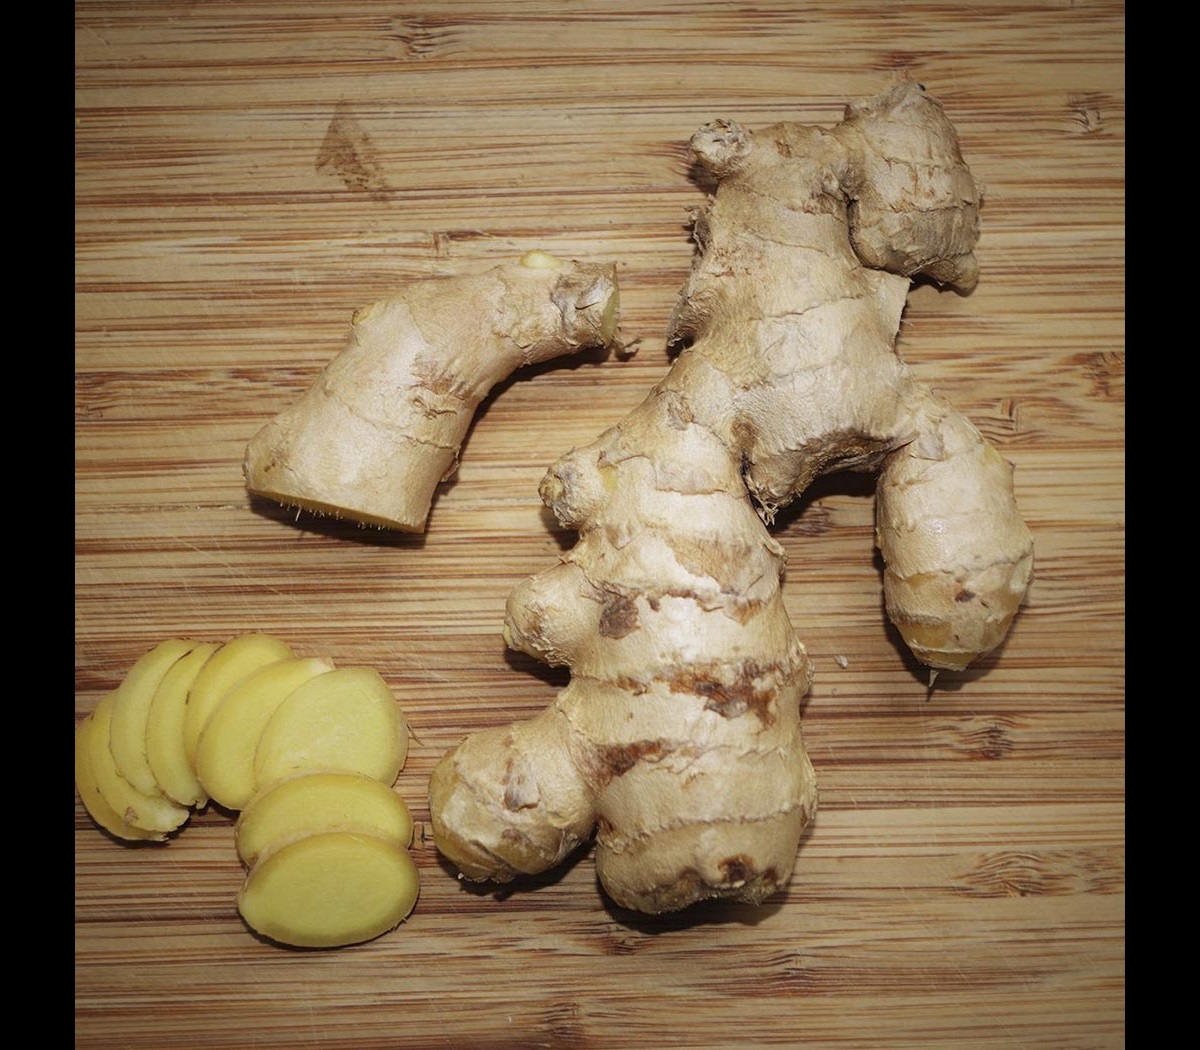 Ginger root, some sliced